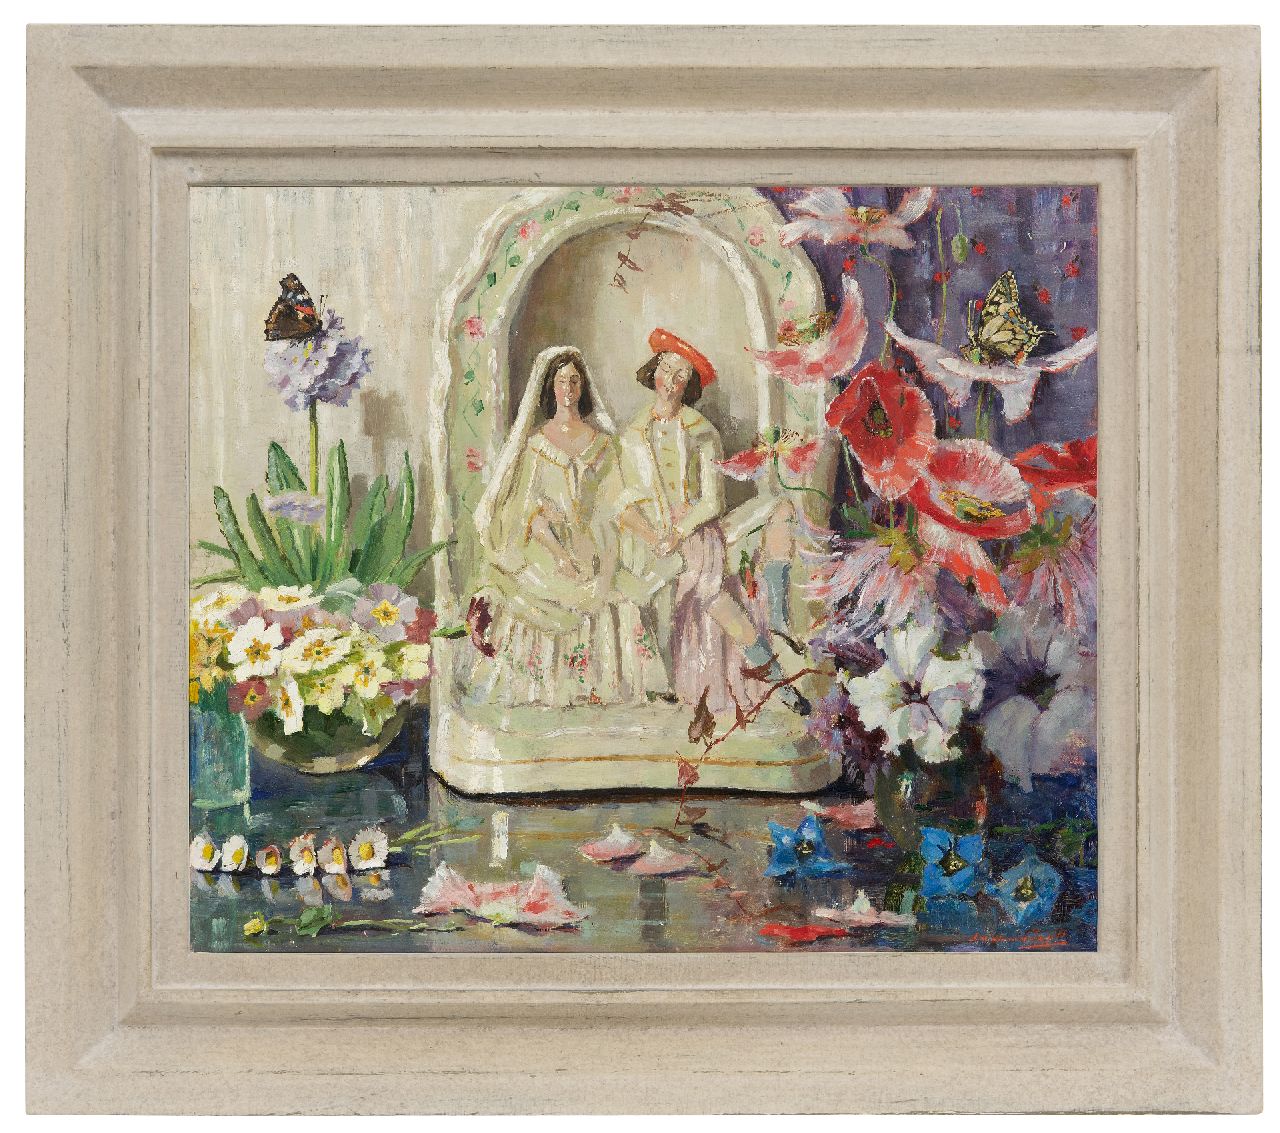 Dam van Isselt L. van | Lucie van Dam van Isselt | Paintings offered for sale | Still life with flowers, butterflies and wedding figurine, oil on panel 45.2 x 53.2 cm, signed r.u.